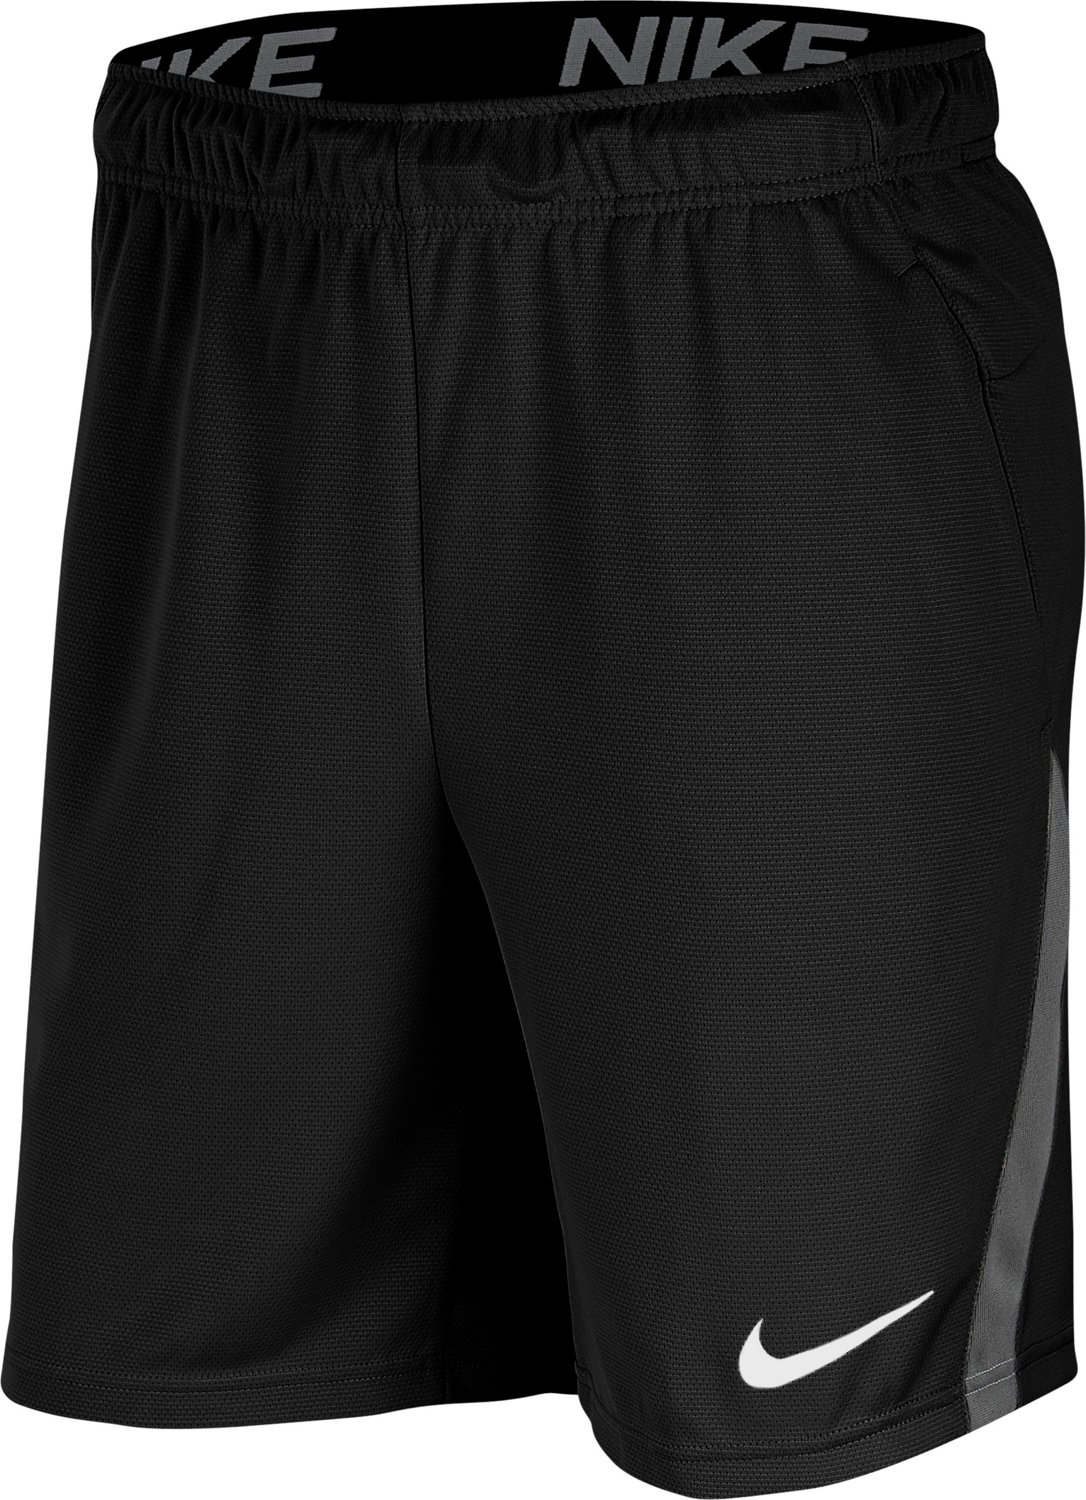 Nike Men's Dry 5.0 Training Shorts | Academy